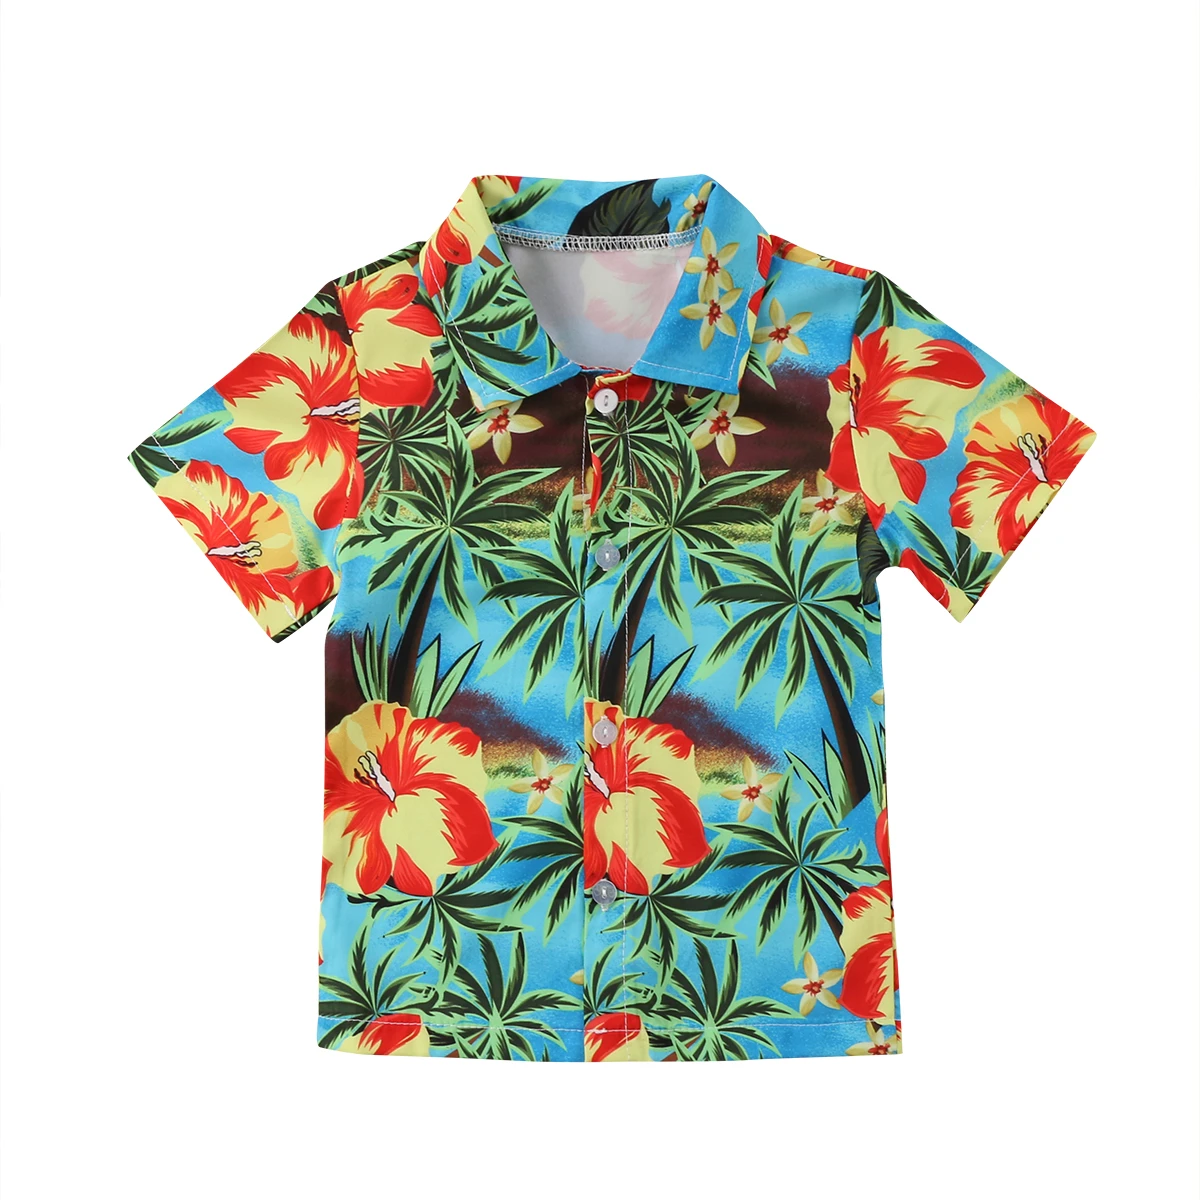 UNICOMIDEA 7-14T Boy's Hawaiian Shirts Kids Summer Short Sleeve Beach Tops Button Down Tee 